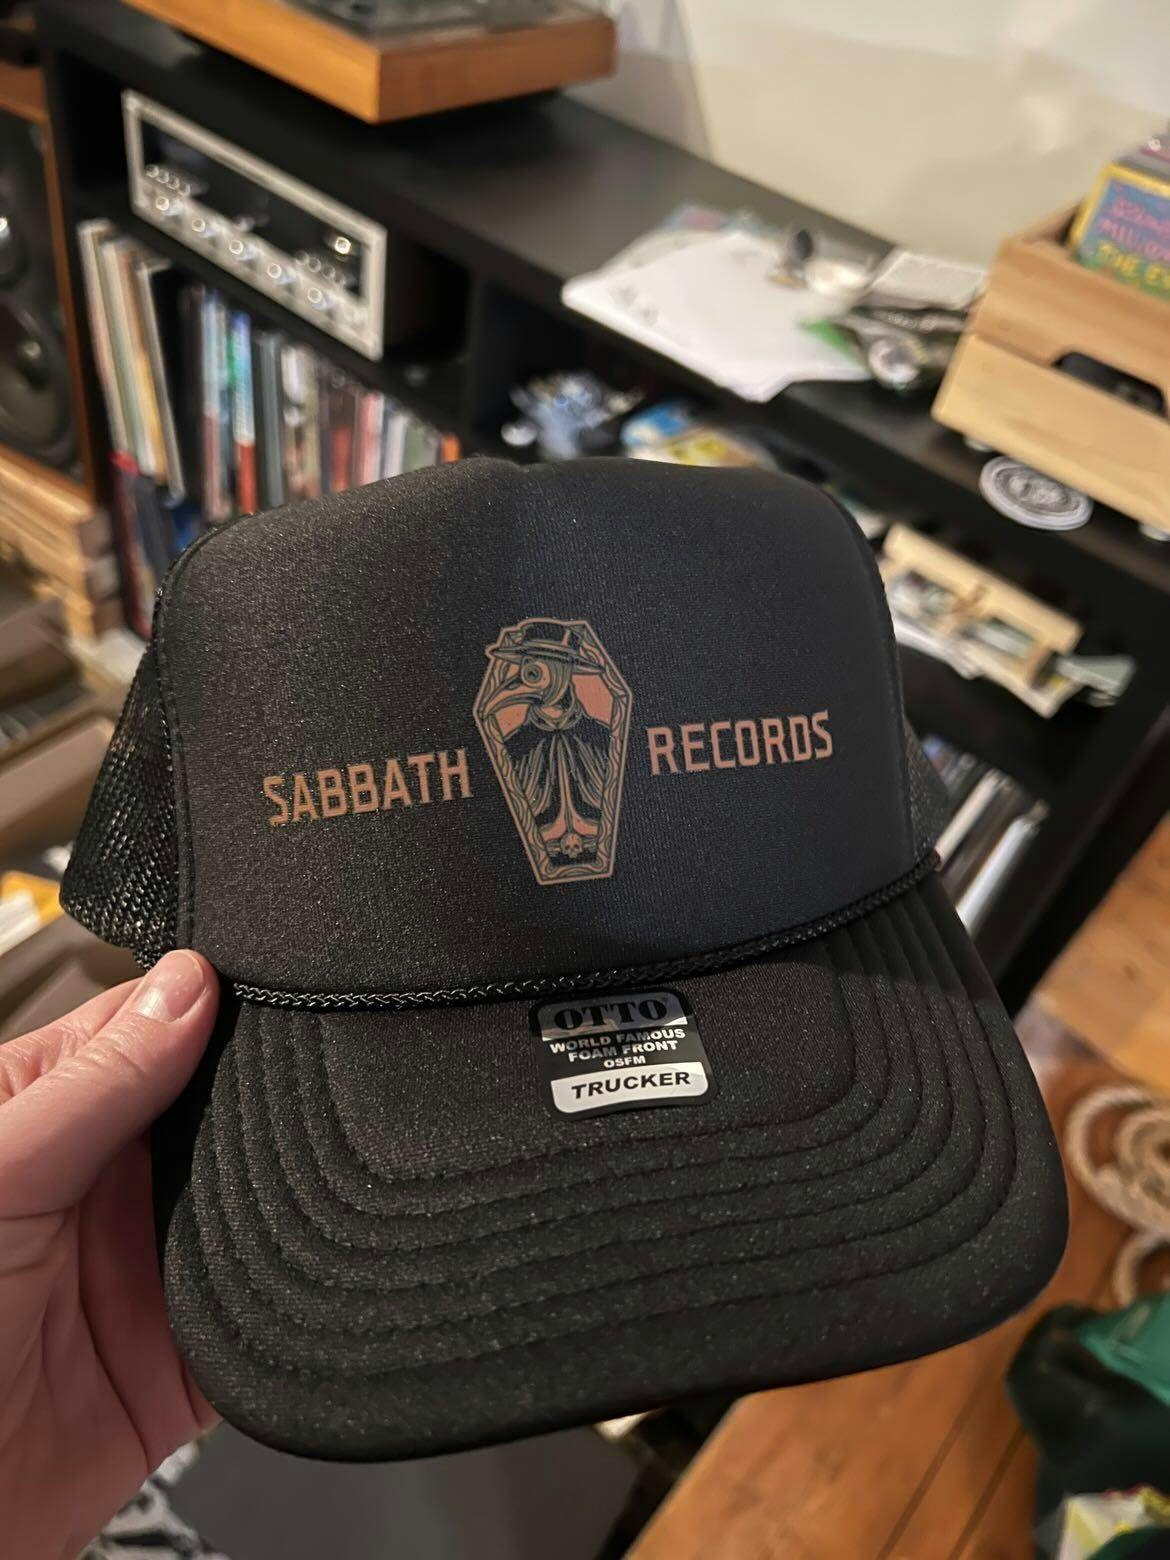 SABBATH RECORDS TRUCKER